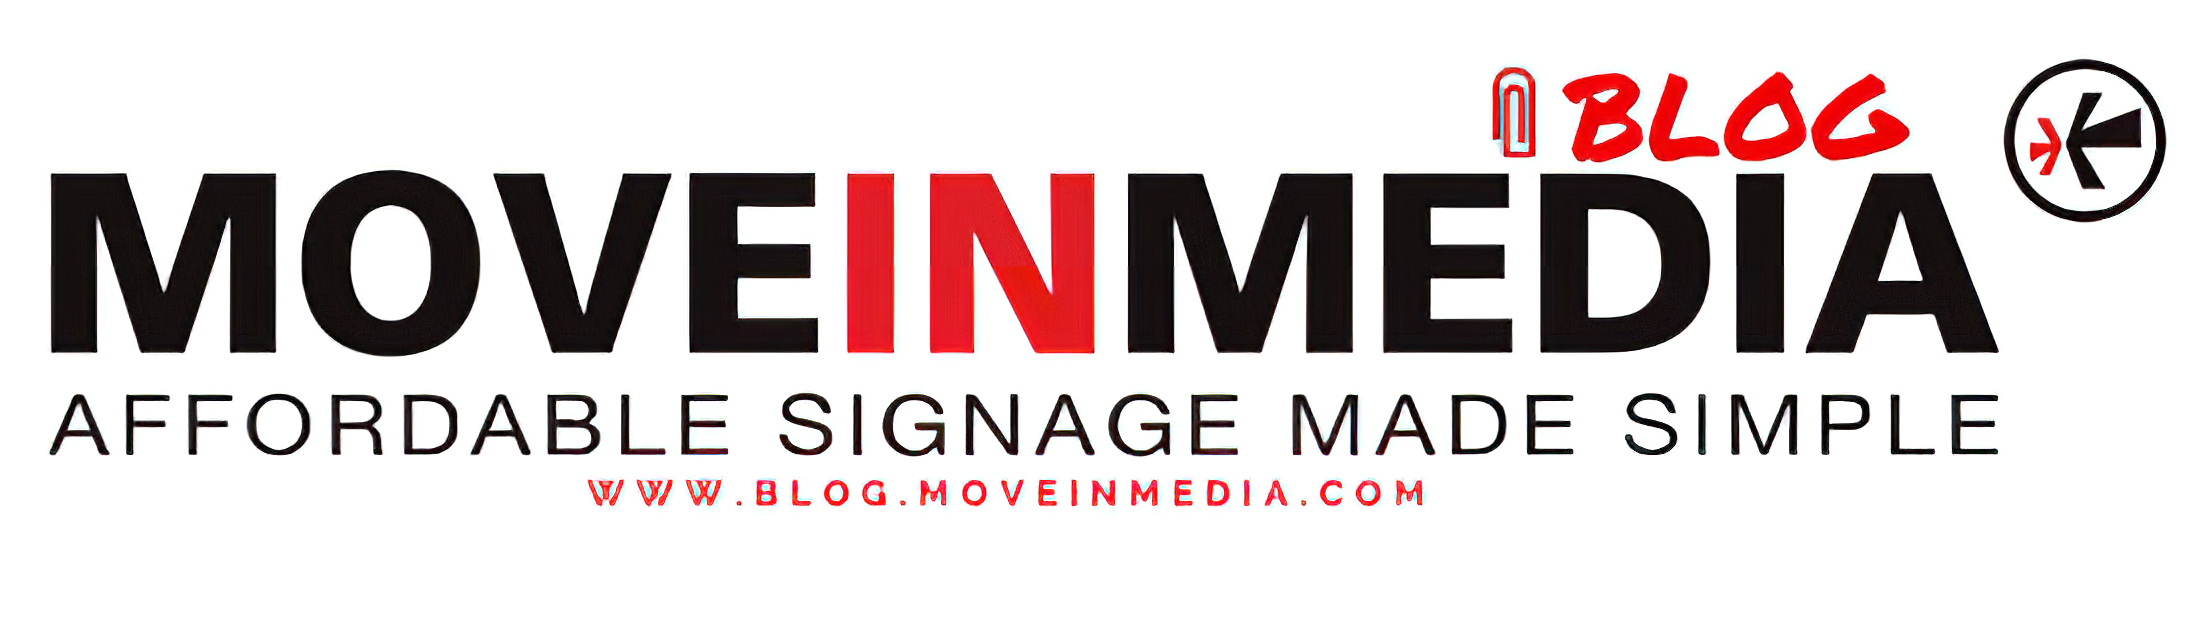 Move In Media Blog Banner